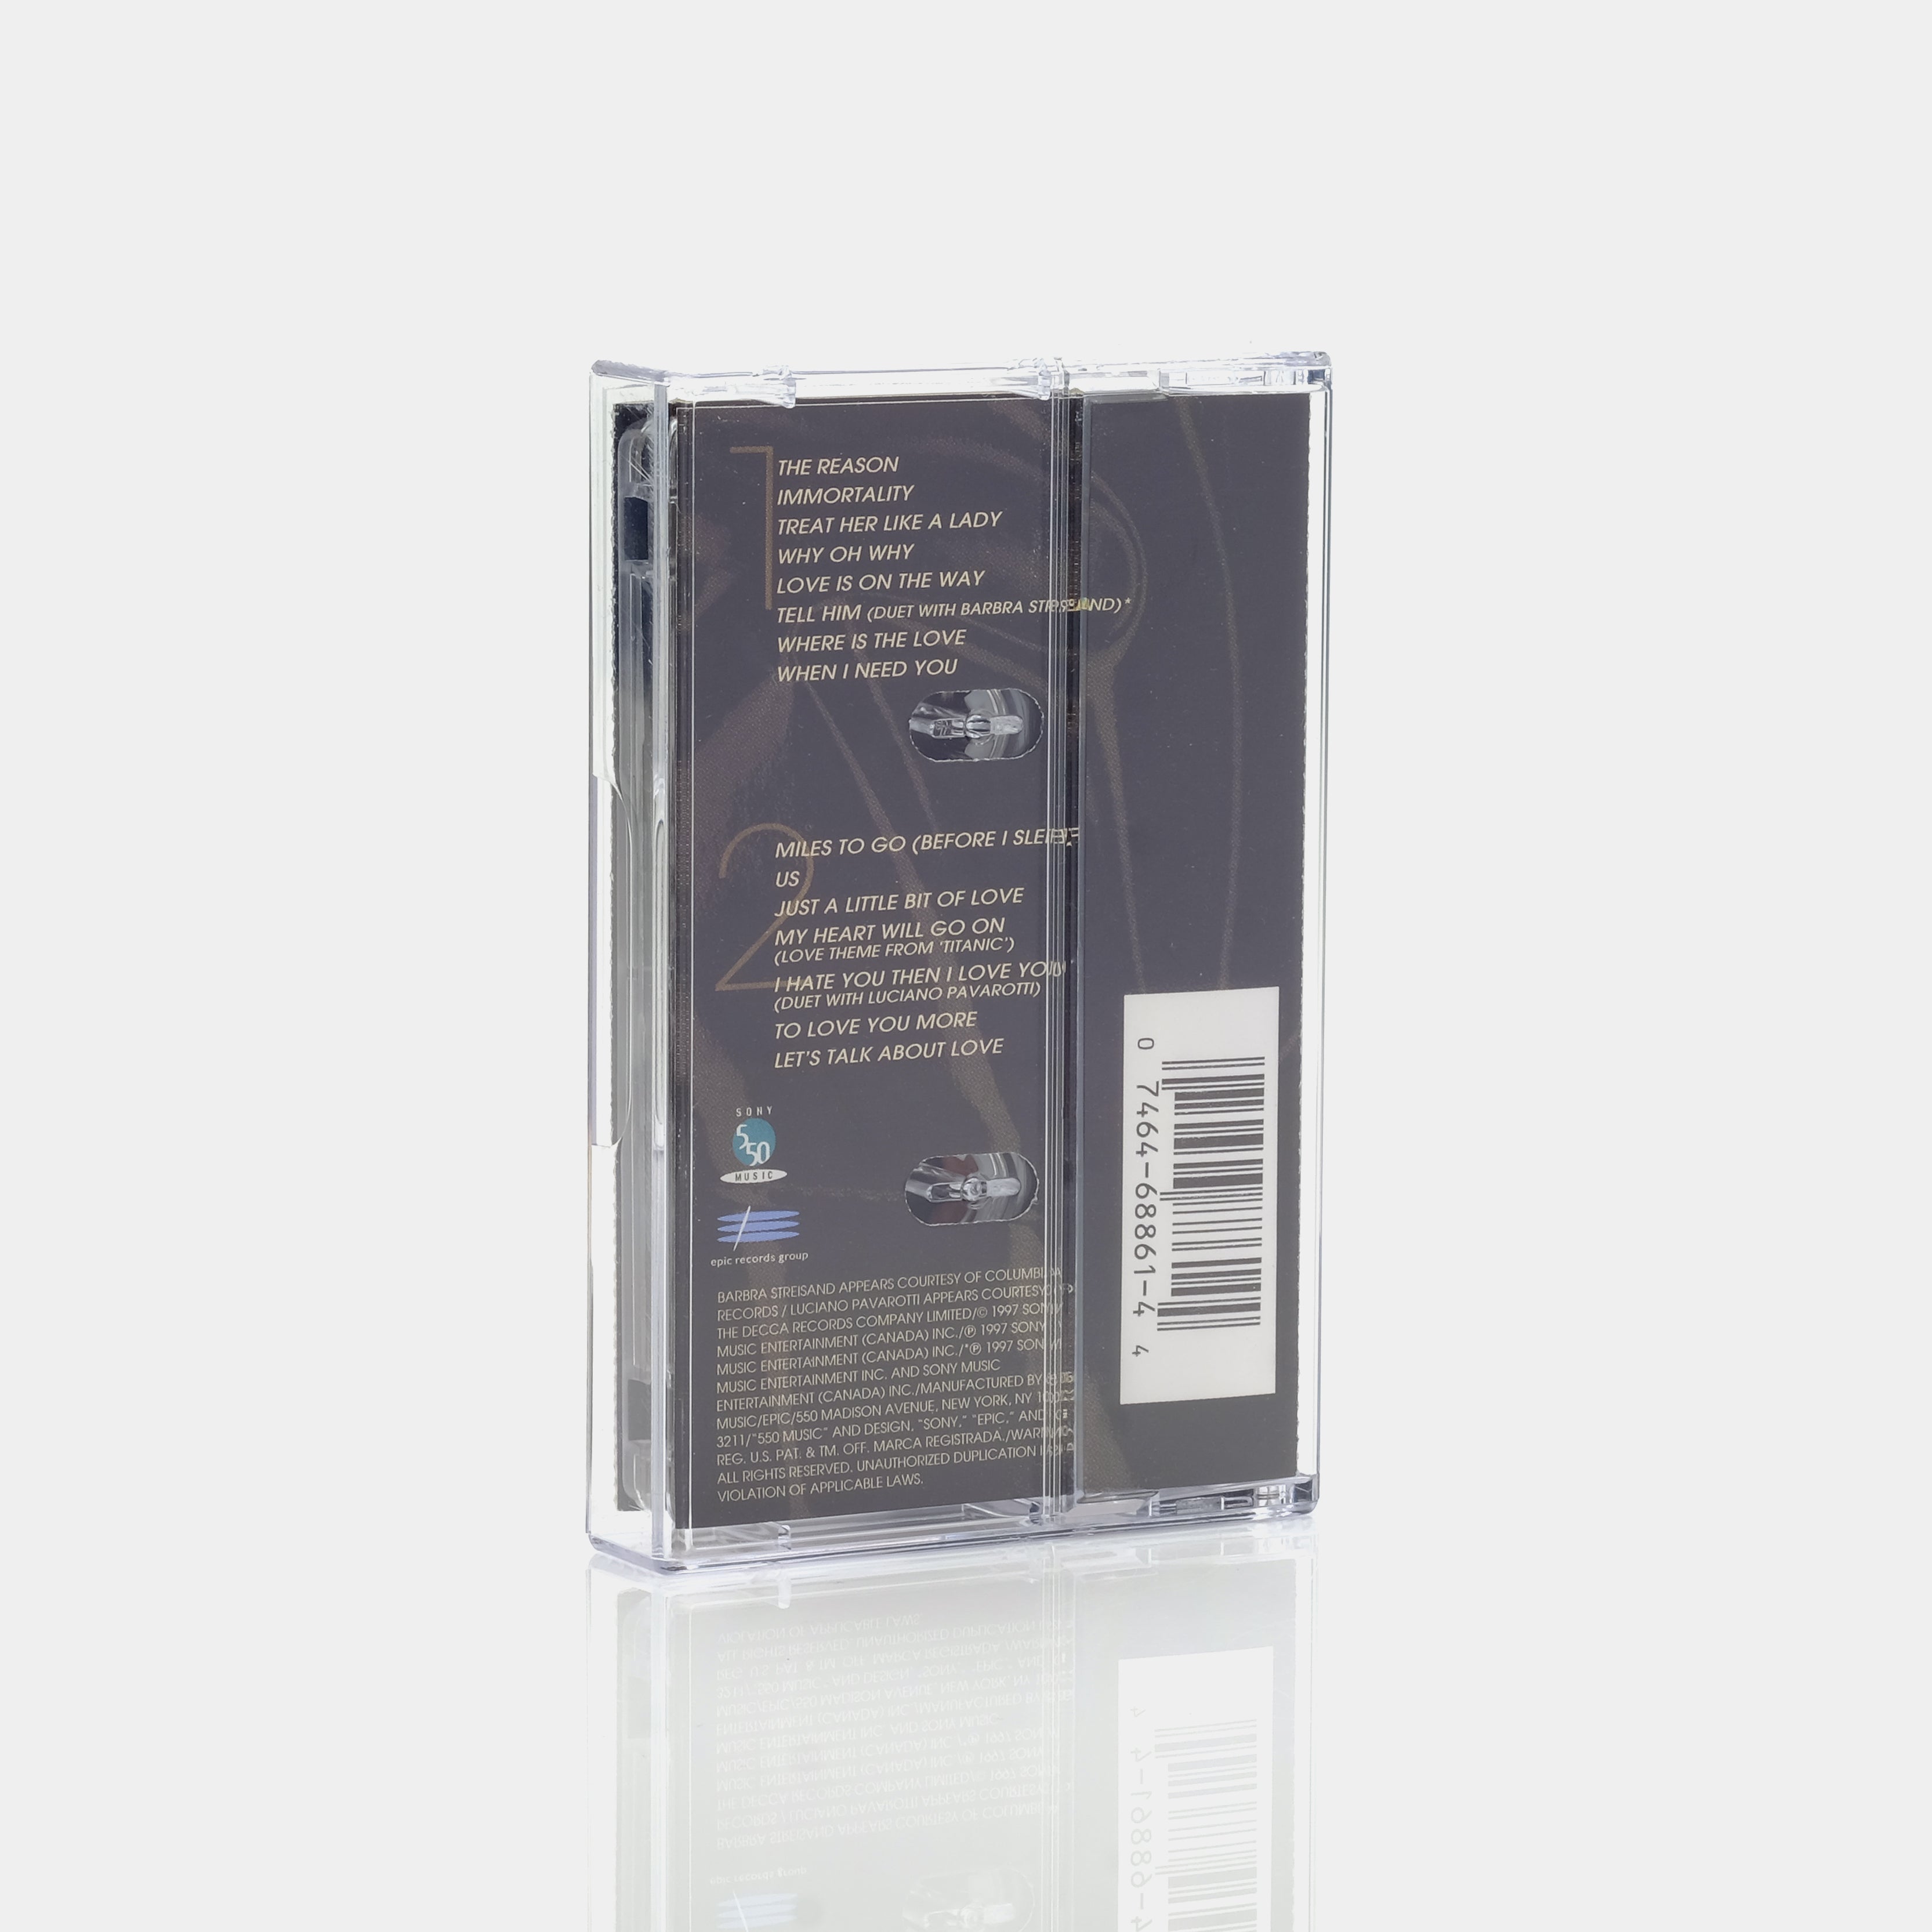 Celine Dion - Let's Talk About Love Cassette Tape